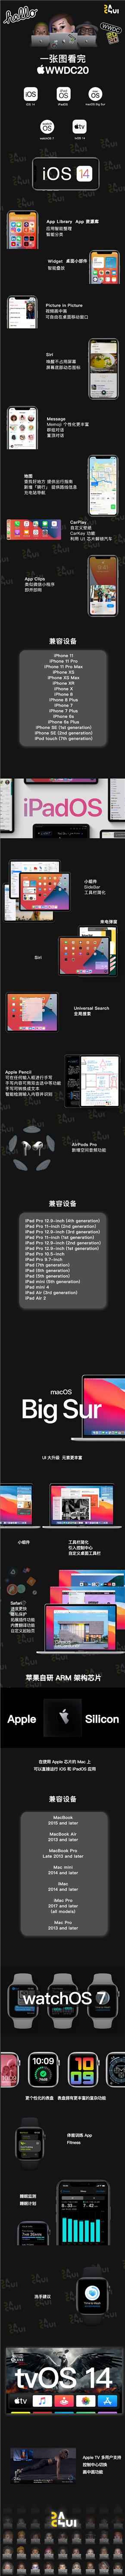 ios14正式发布 抢先体验最新版苹果系统方法 一张图带你看完整个苹果WWDC20